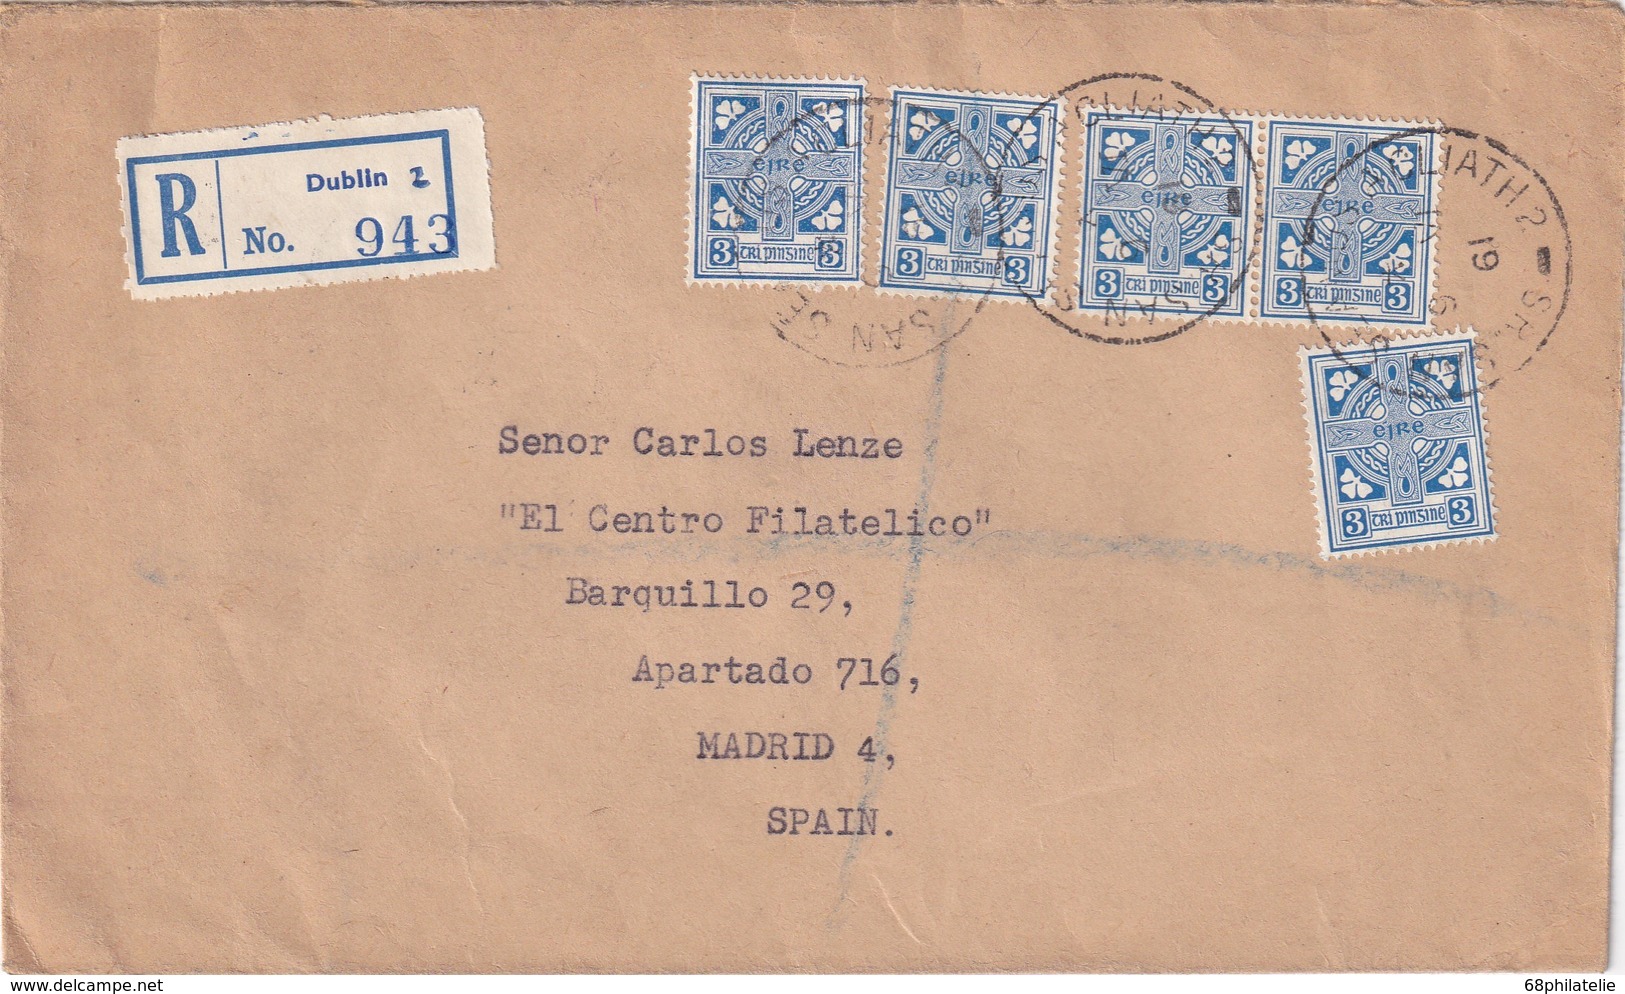 IRLANDE 1961 LETTRE RECOMMANDEE DE DUBLIN AVEC CACHET ARRIVEE MADRID - Cartas & Documentos